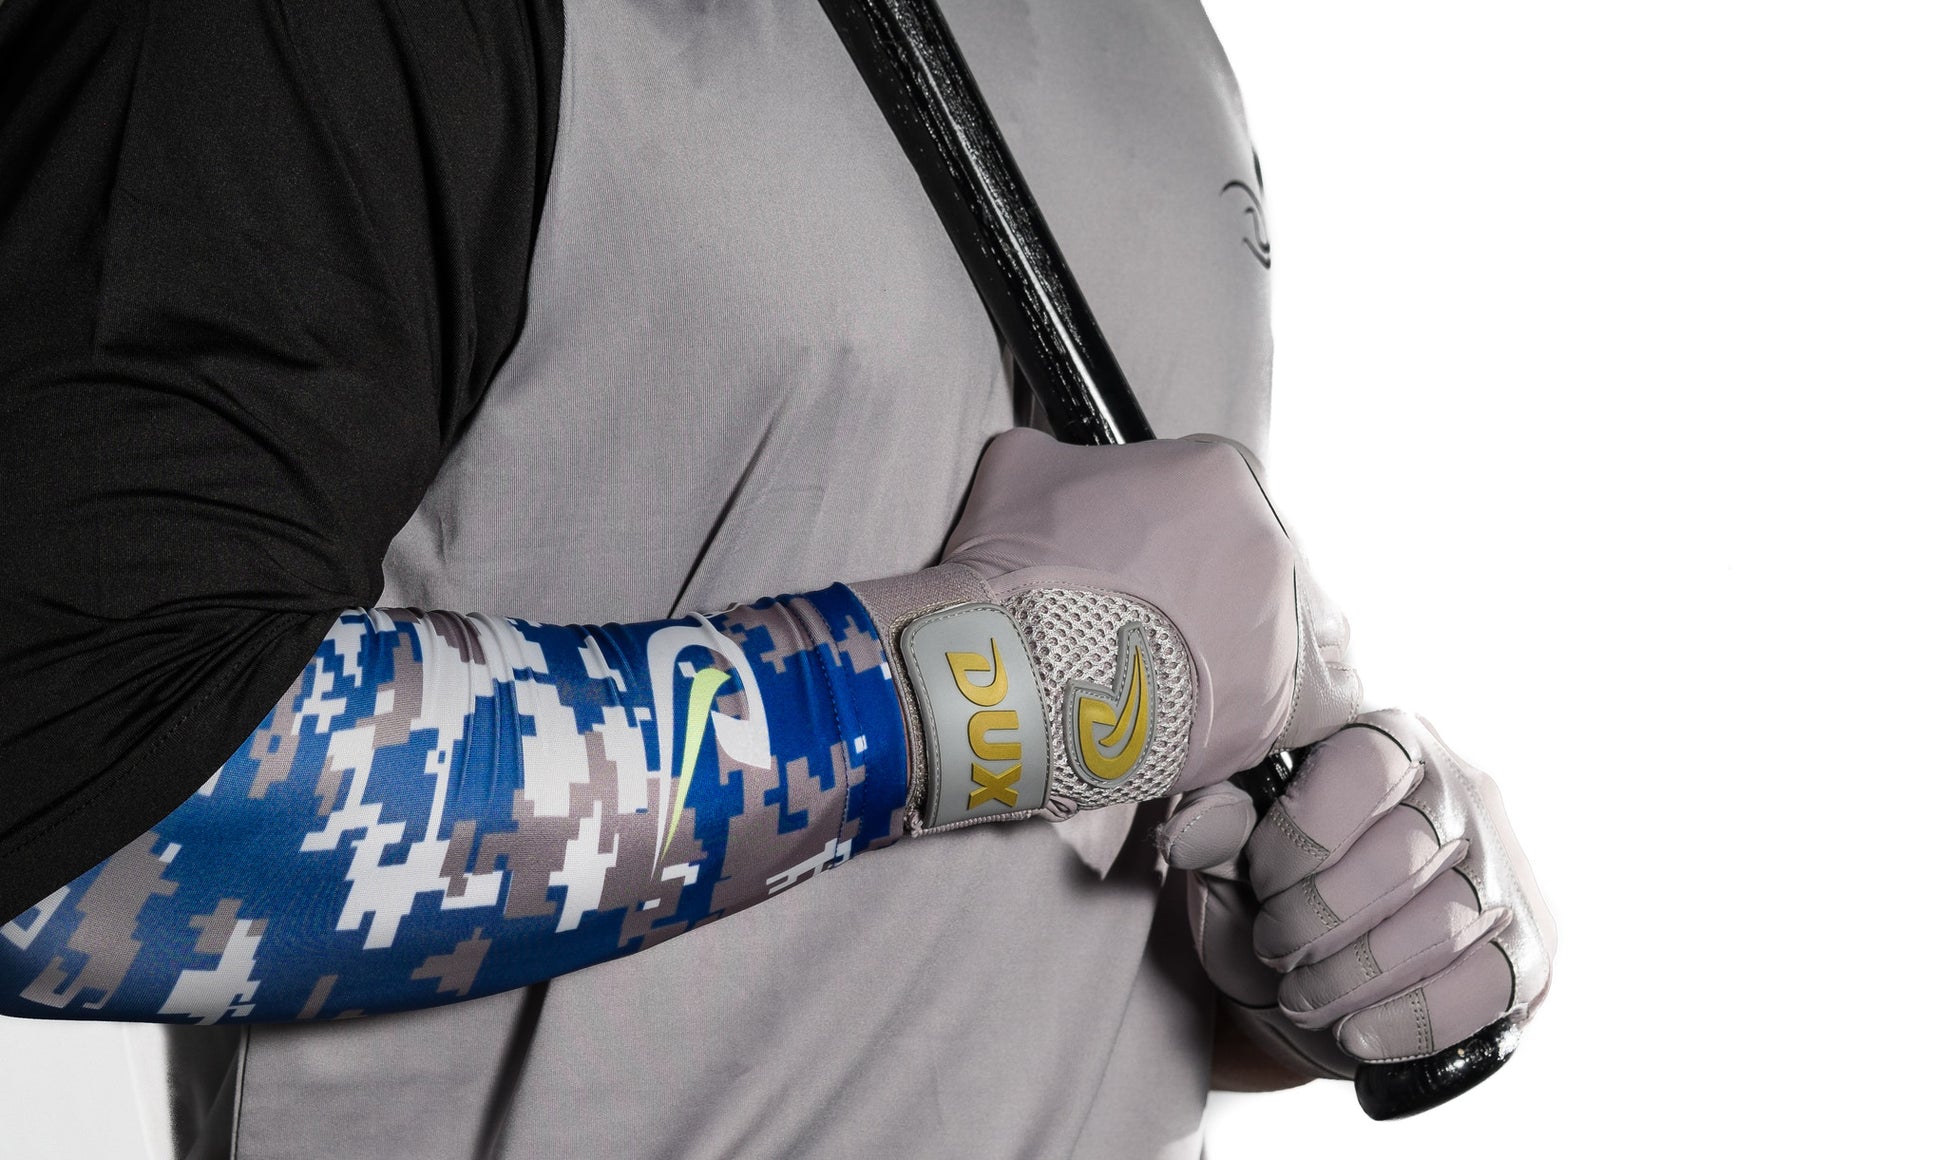 Dux_Sports_Compression_Arm_Sleeves_batting_glove_bundle